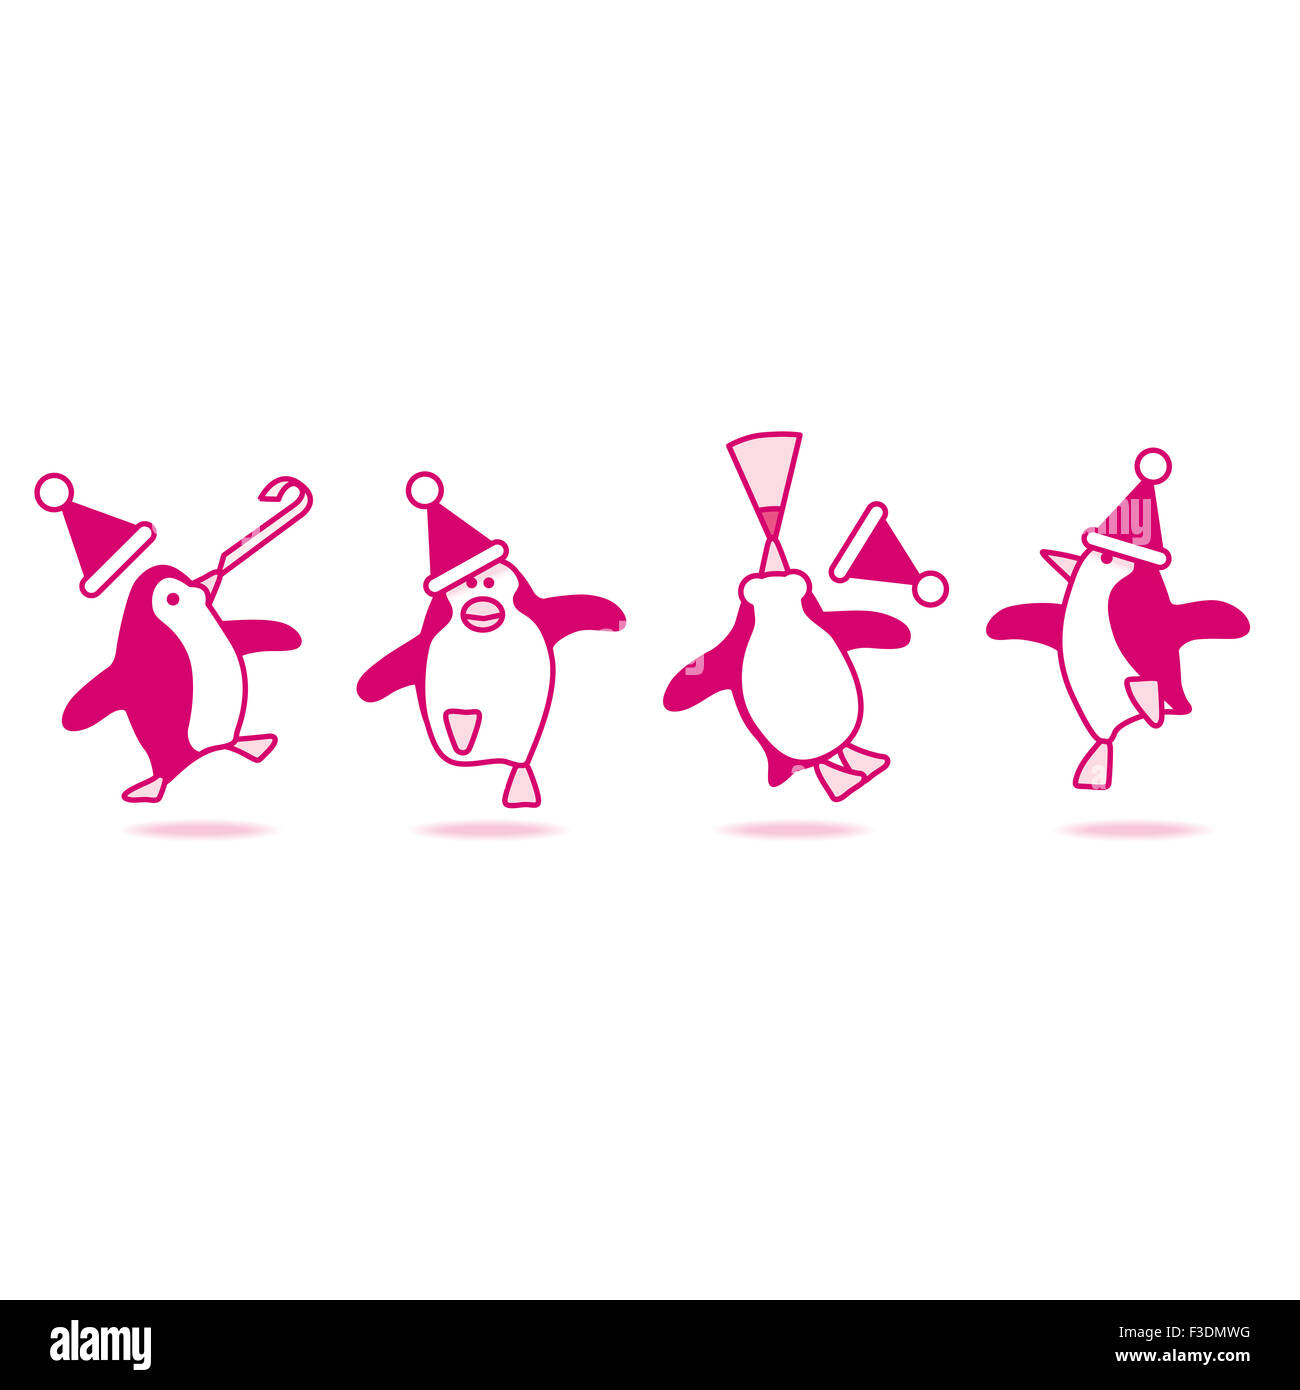 Four Happy Pink Penguins wearing Santa Hats Dancing at fun Party Stock Photo